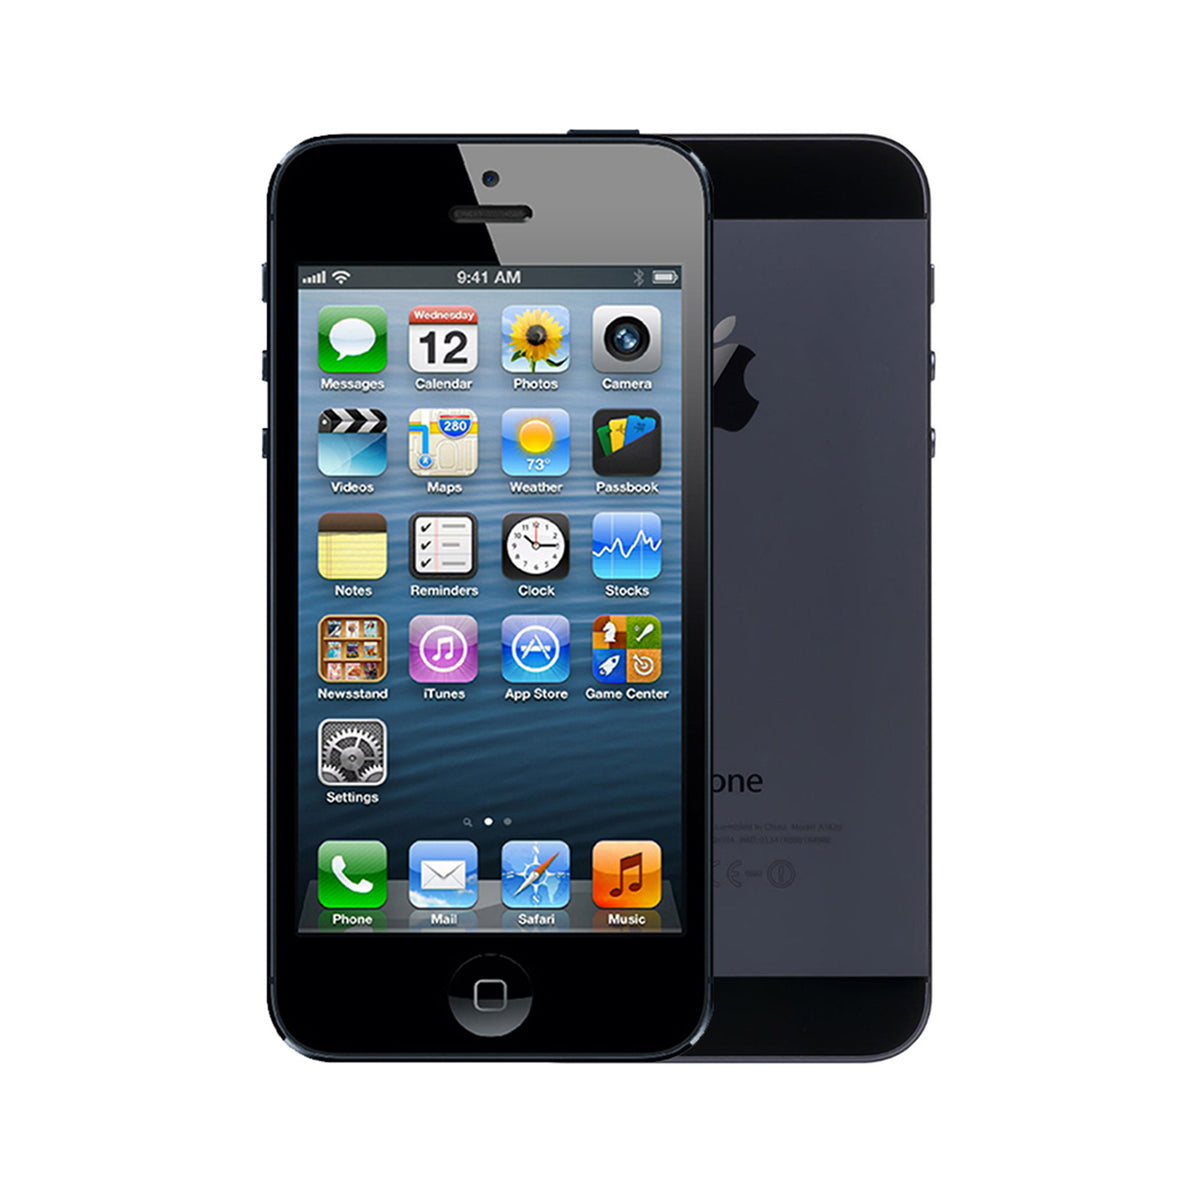 Apple iPhone 5 - Good Condition